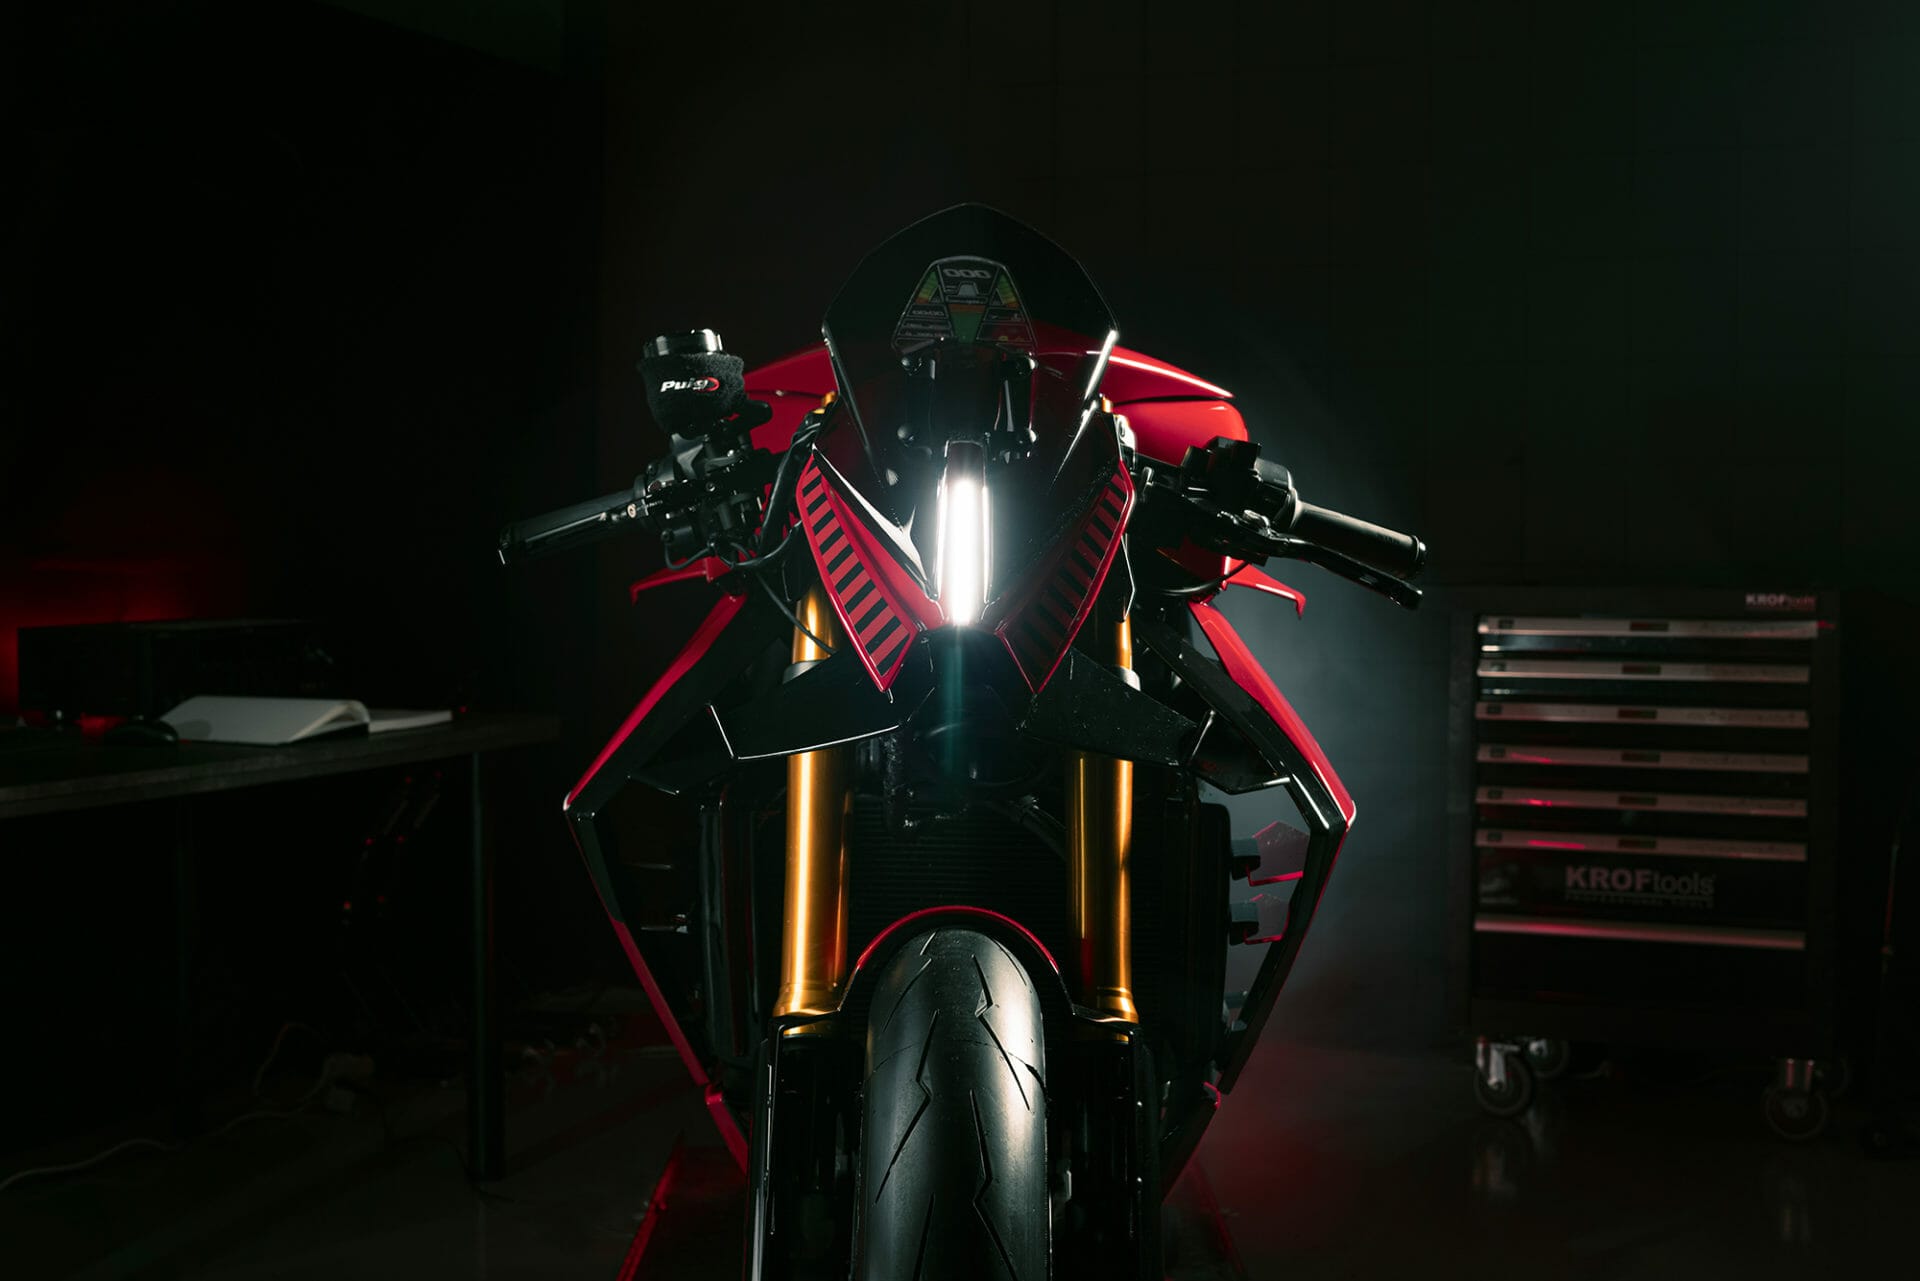 Puig transforms naked bike into futuristic superbike - Puig Diablo -   - Motorcycle-Magazine